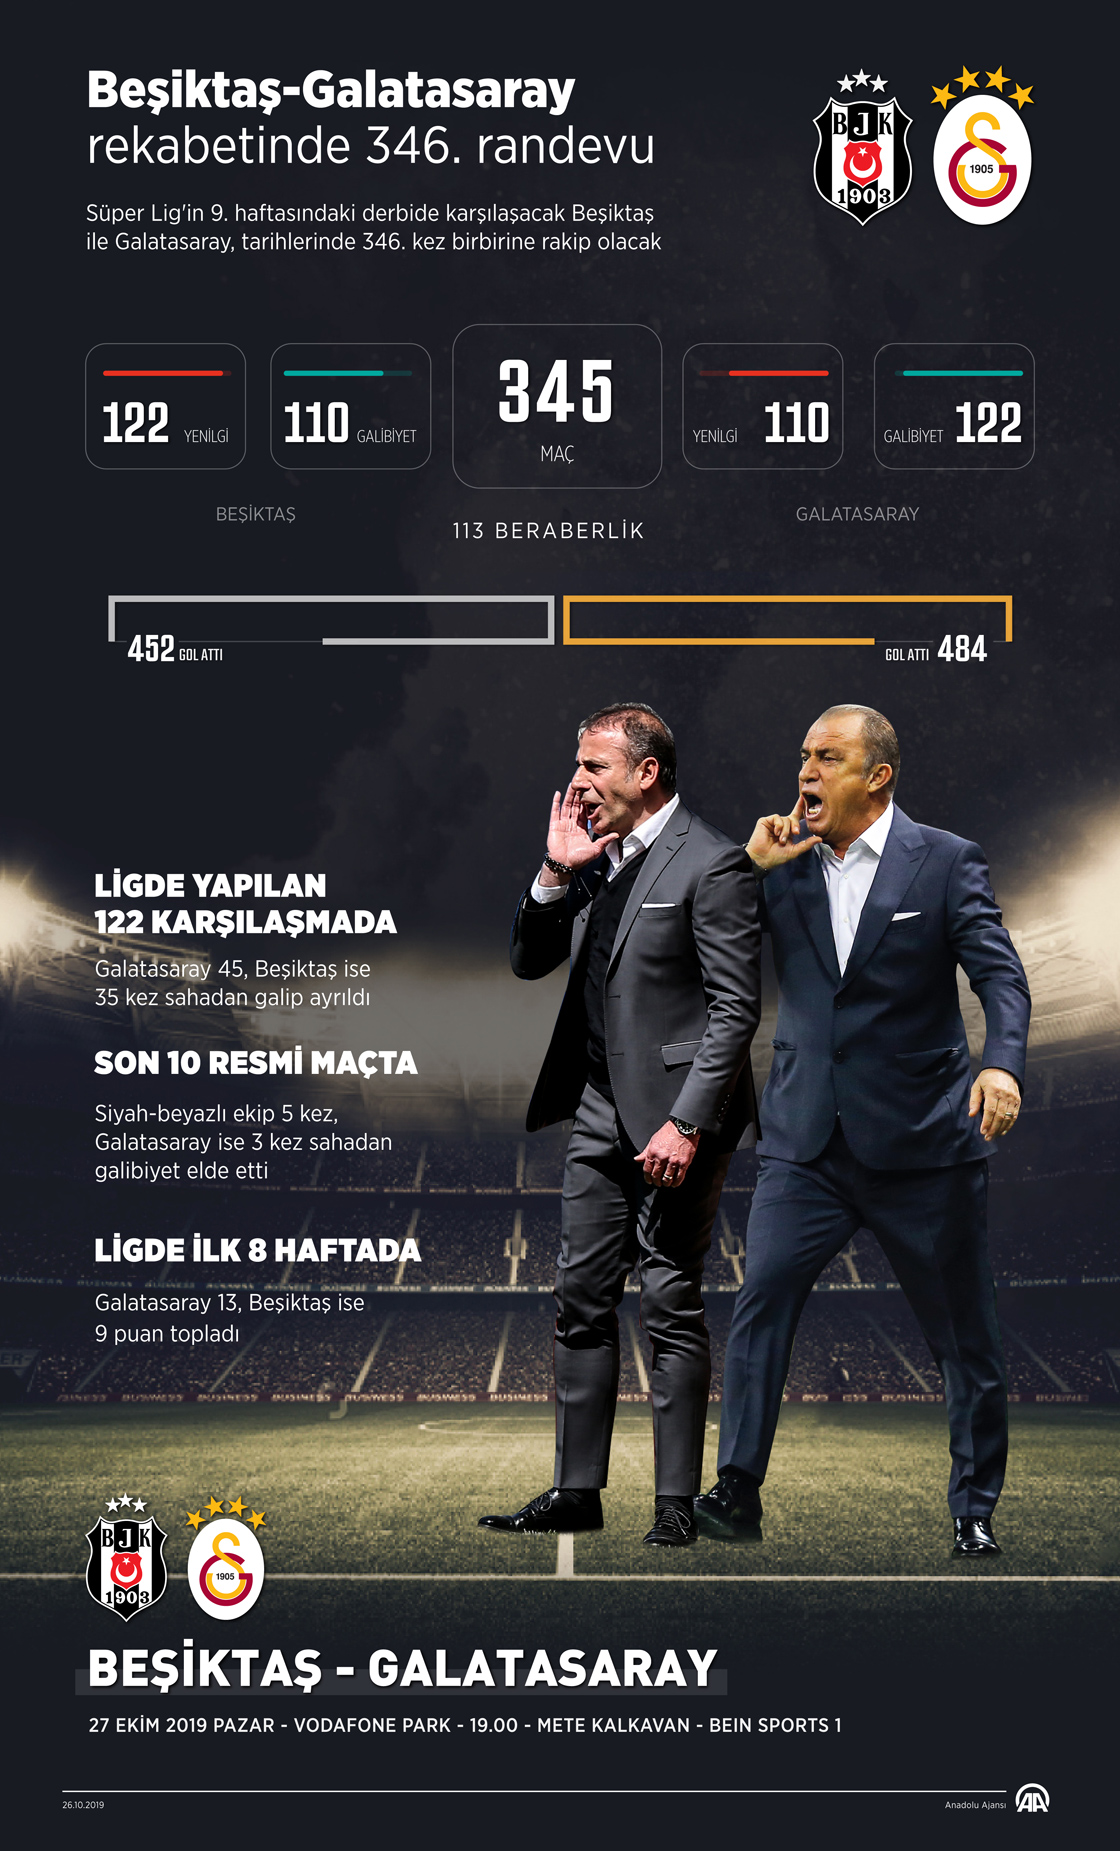 Beşiktaş-Galatasaray rekabetinde 346. randevu 